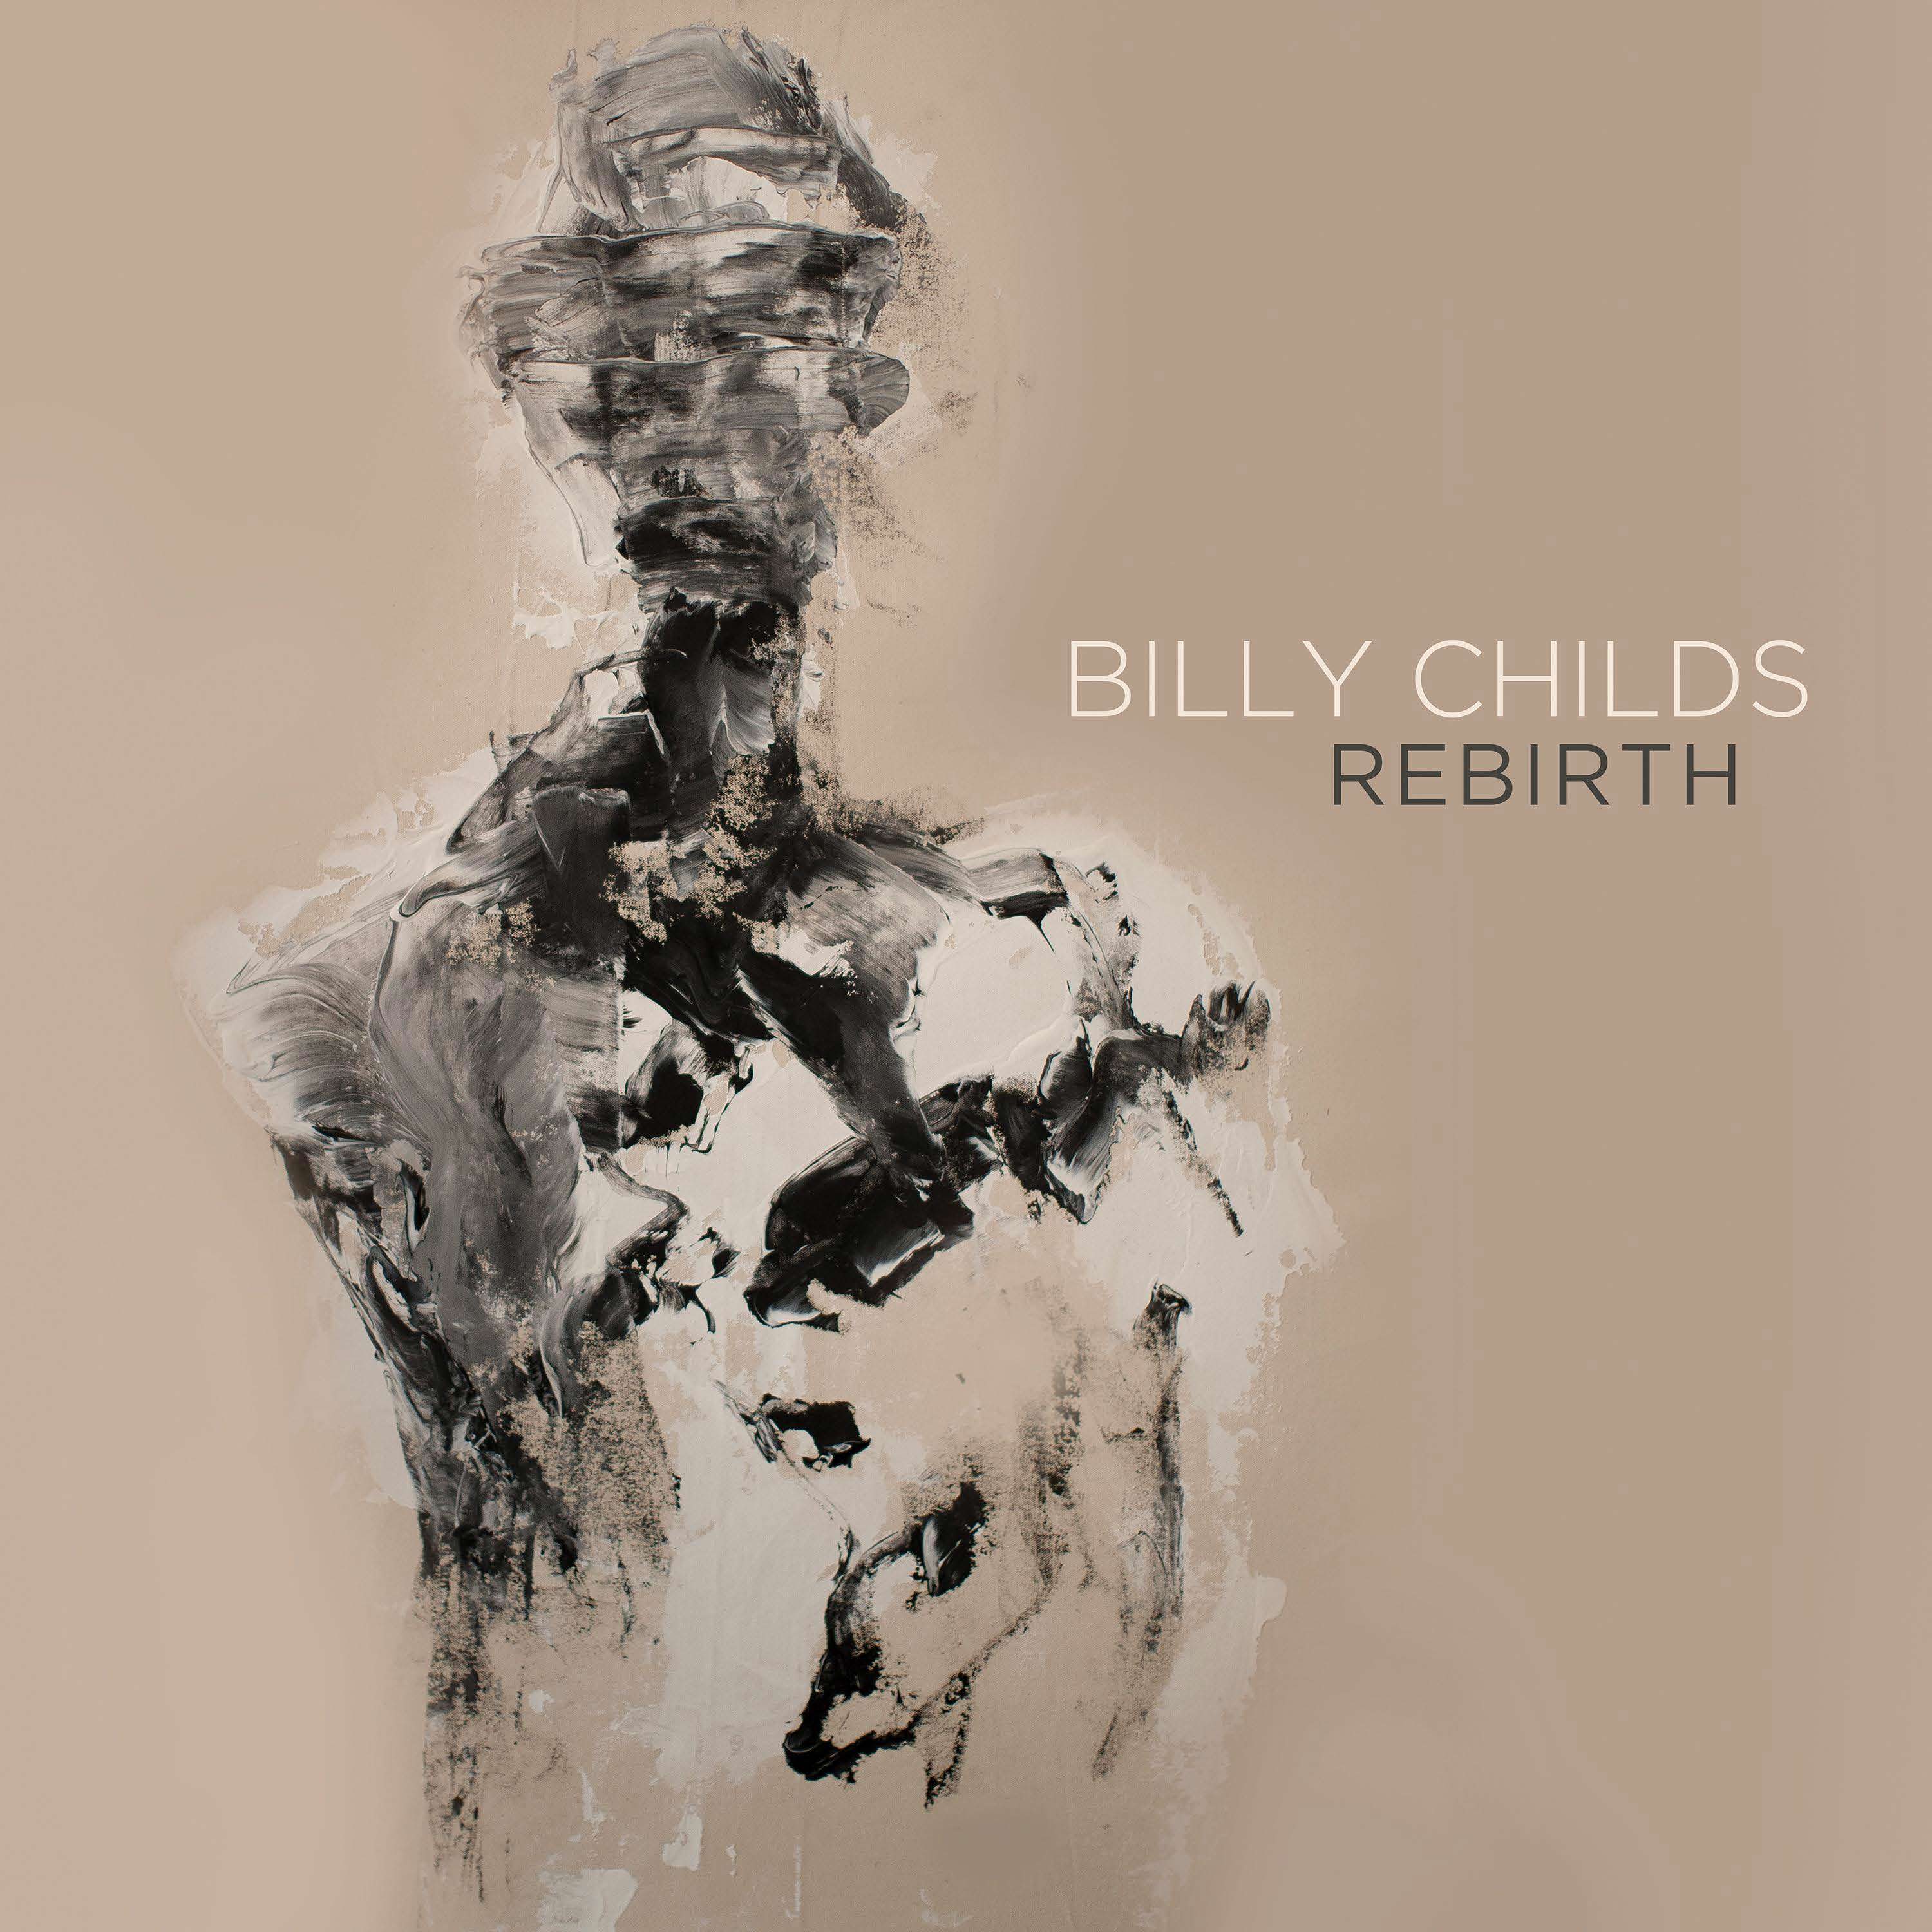 Billy Childs - Rebirth (2017) [HDTracks FLAC 24bit/48kHz]